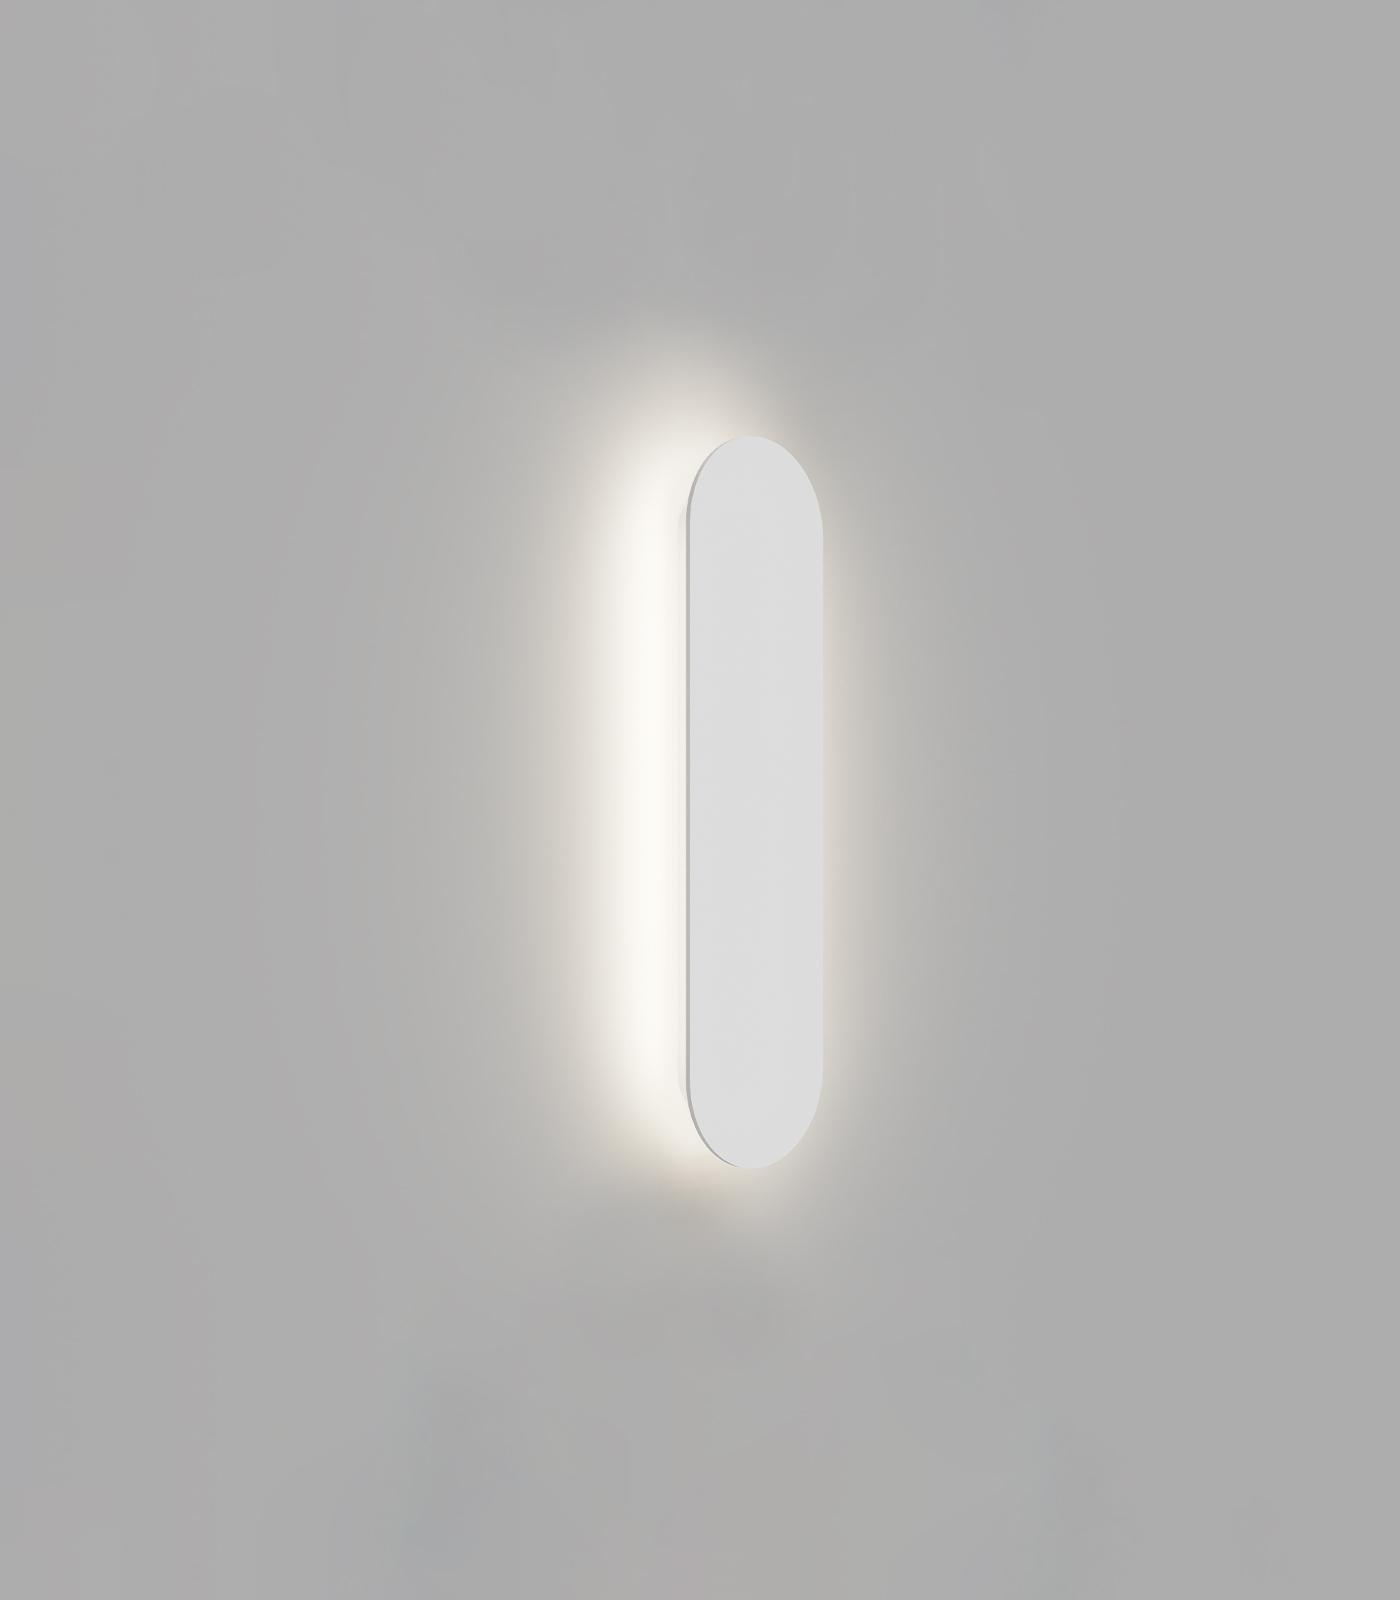 lightco-shadow-long-wall-light-vertical-side-on